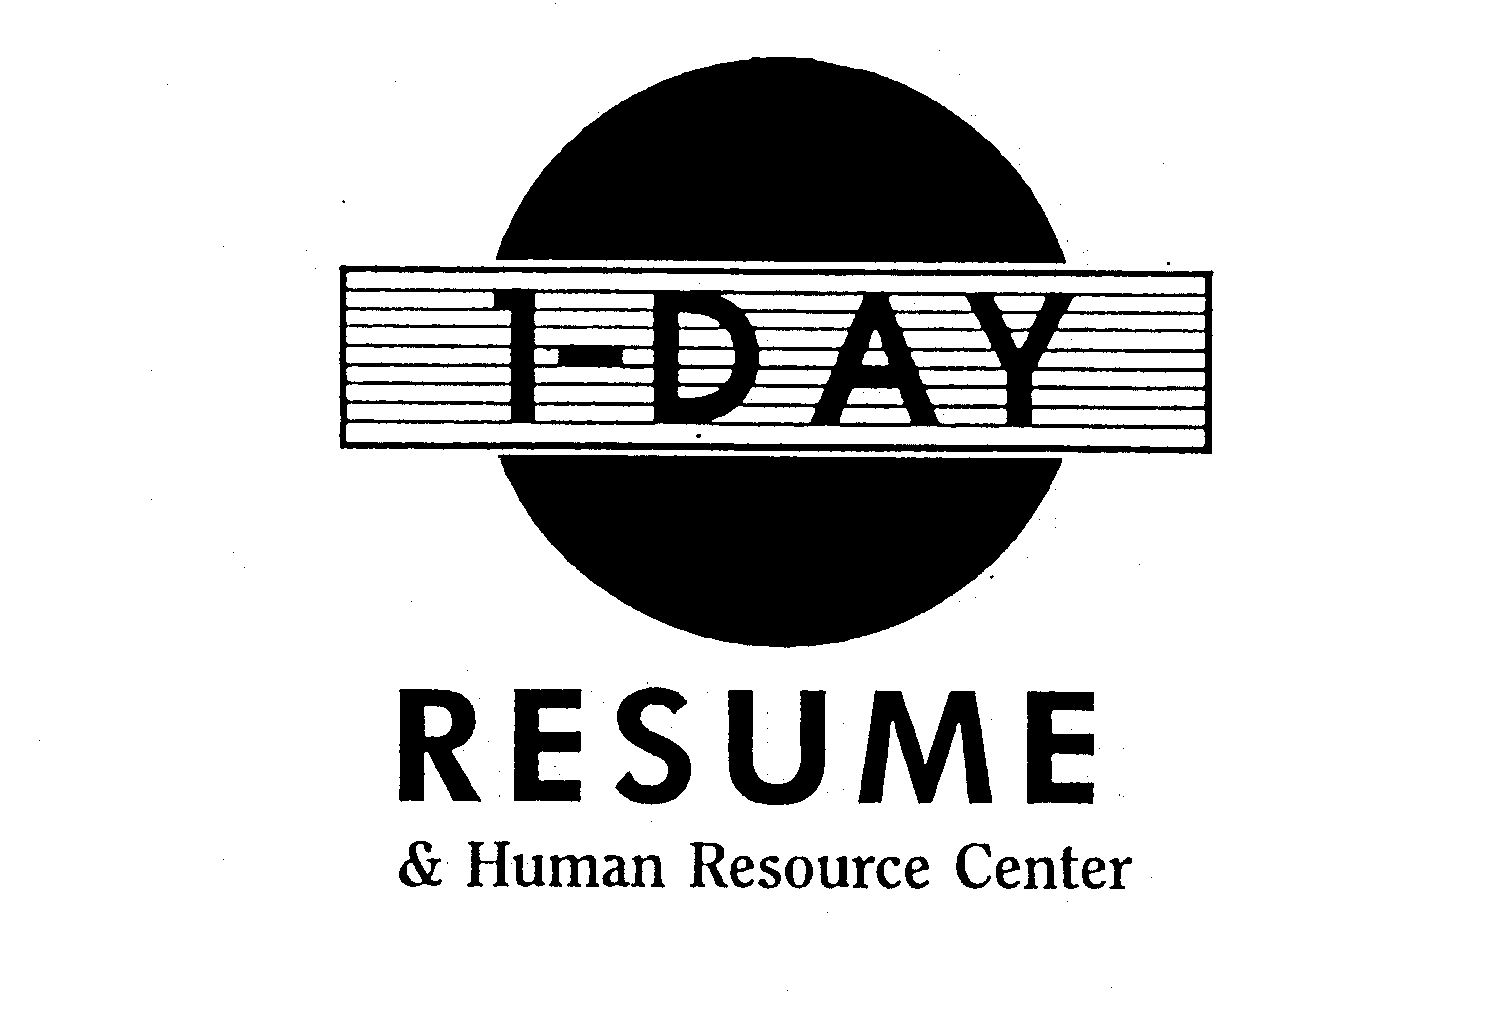  1-DAY RESUME &amp; HUMAN RESOURCE CENTER